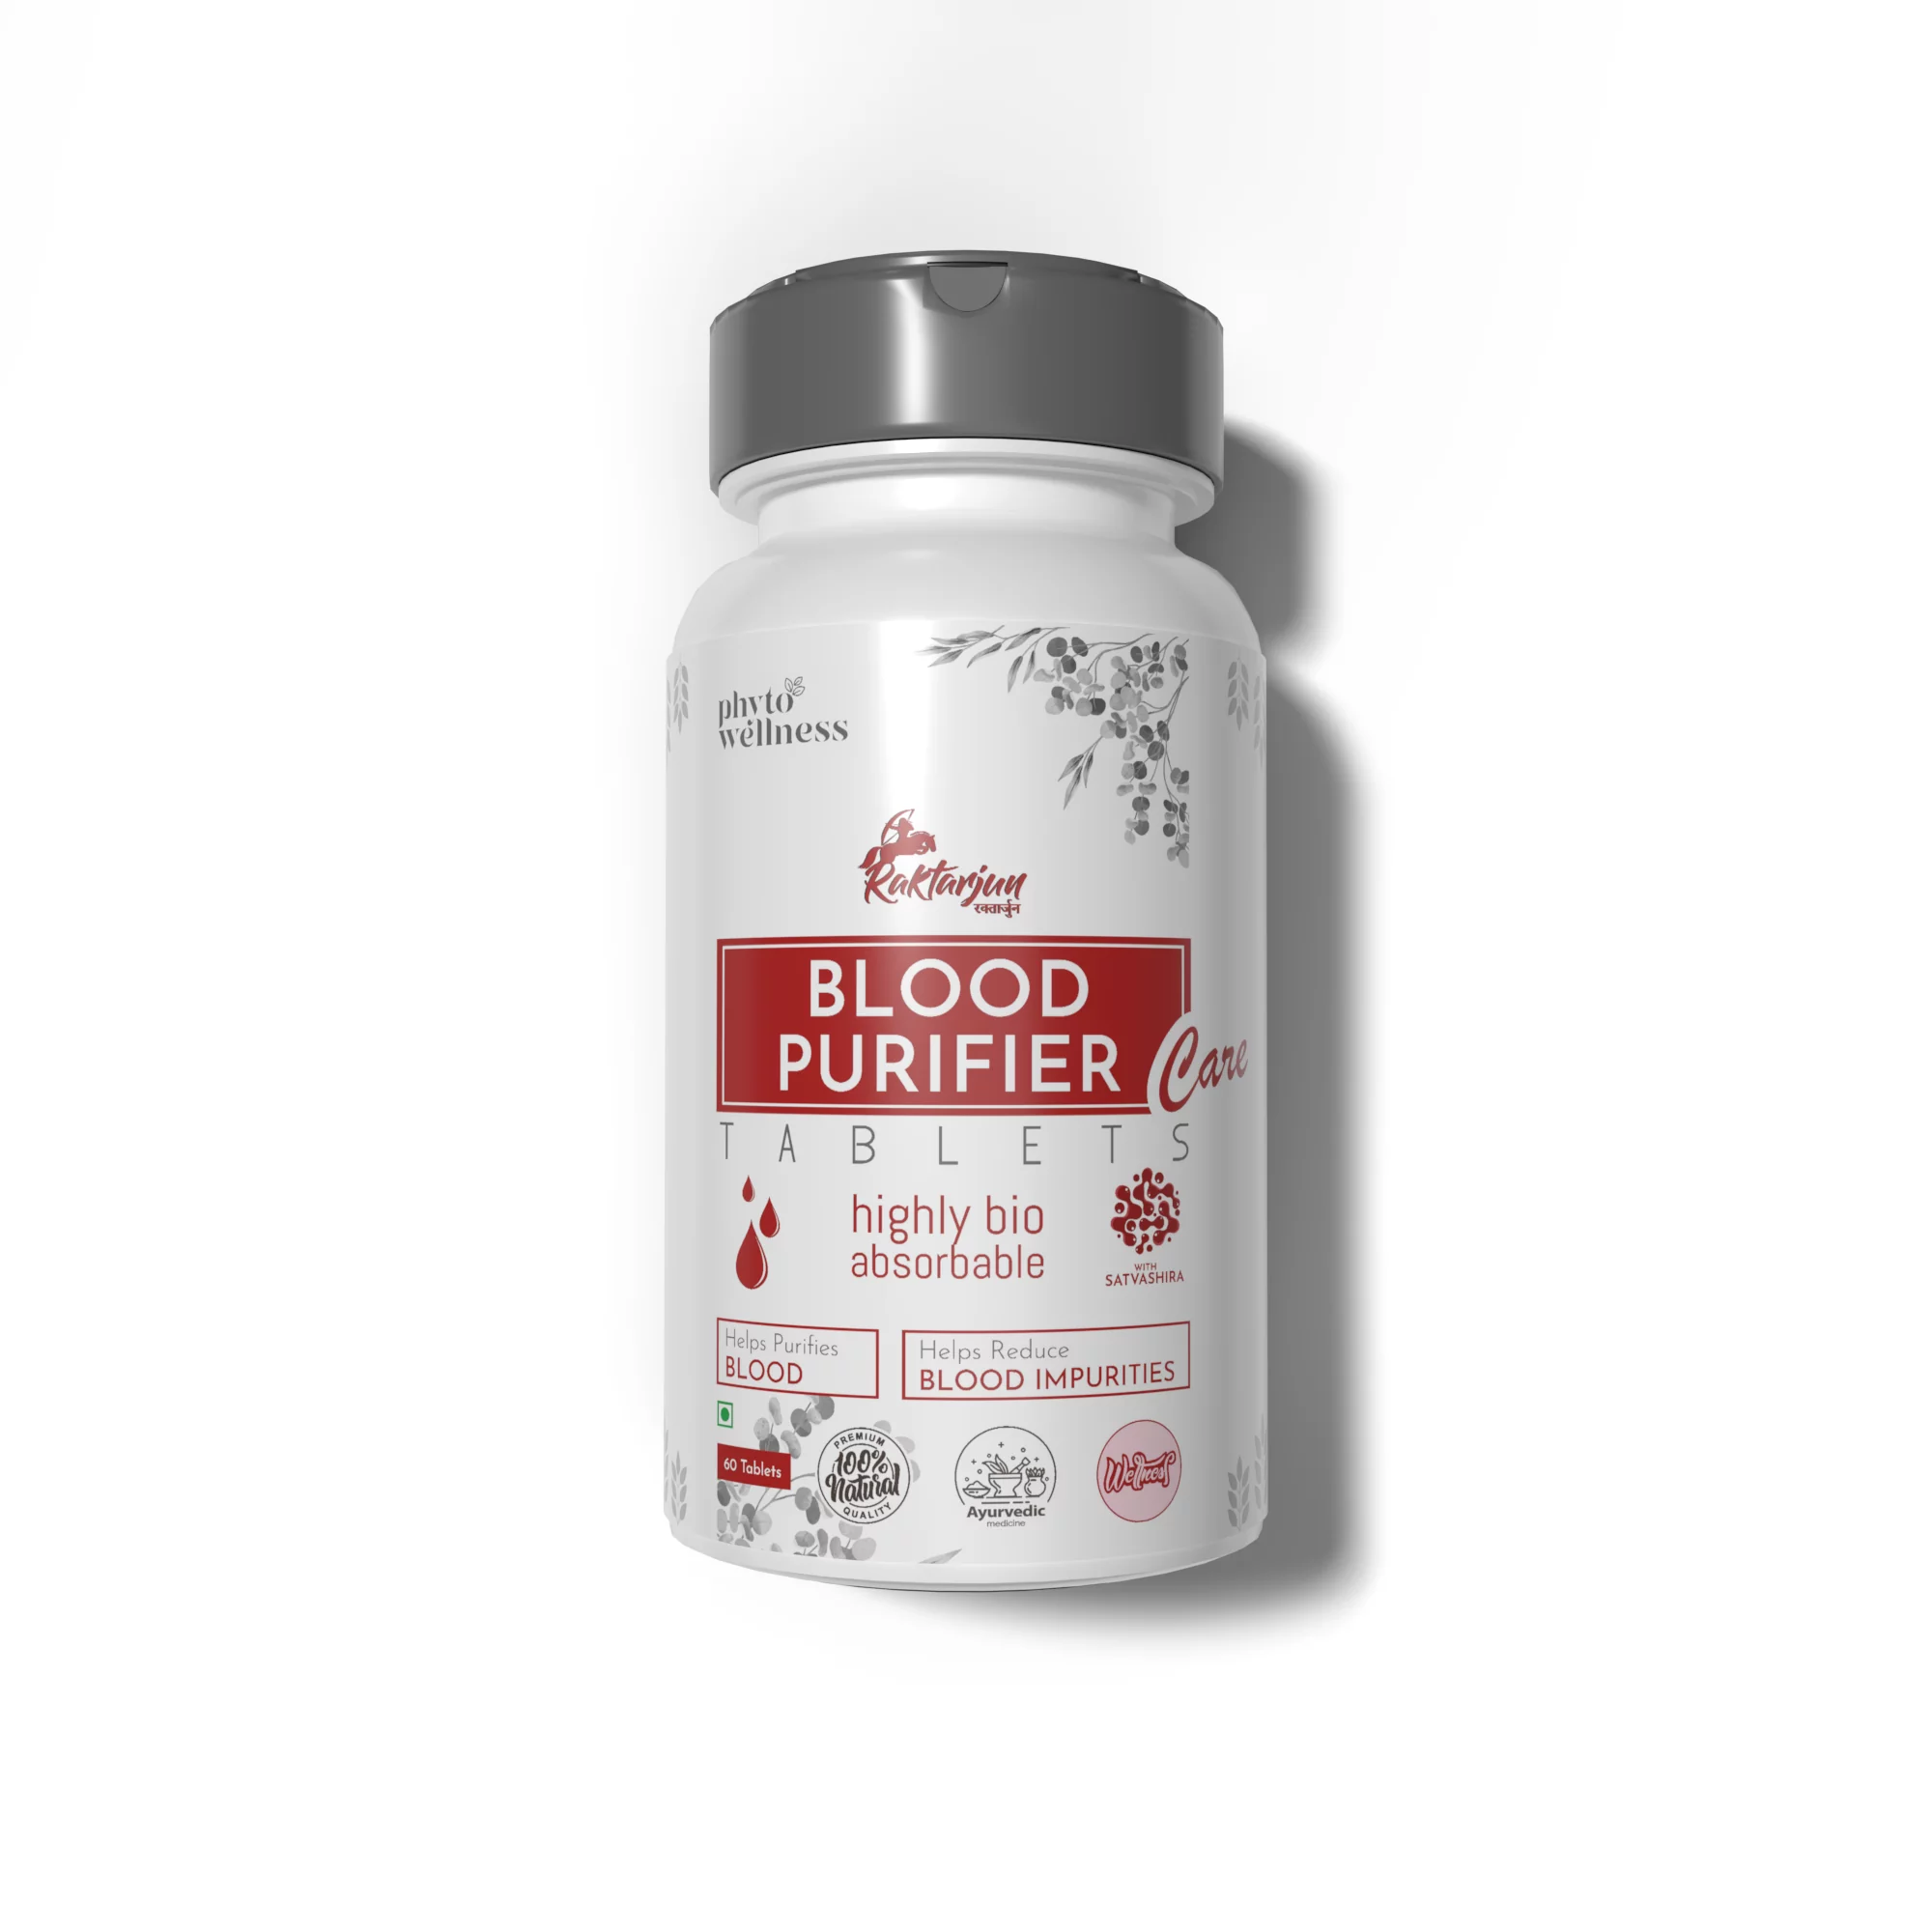 Probiotic Blood Purifier Care 60 Tablets